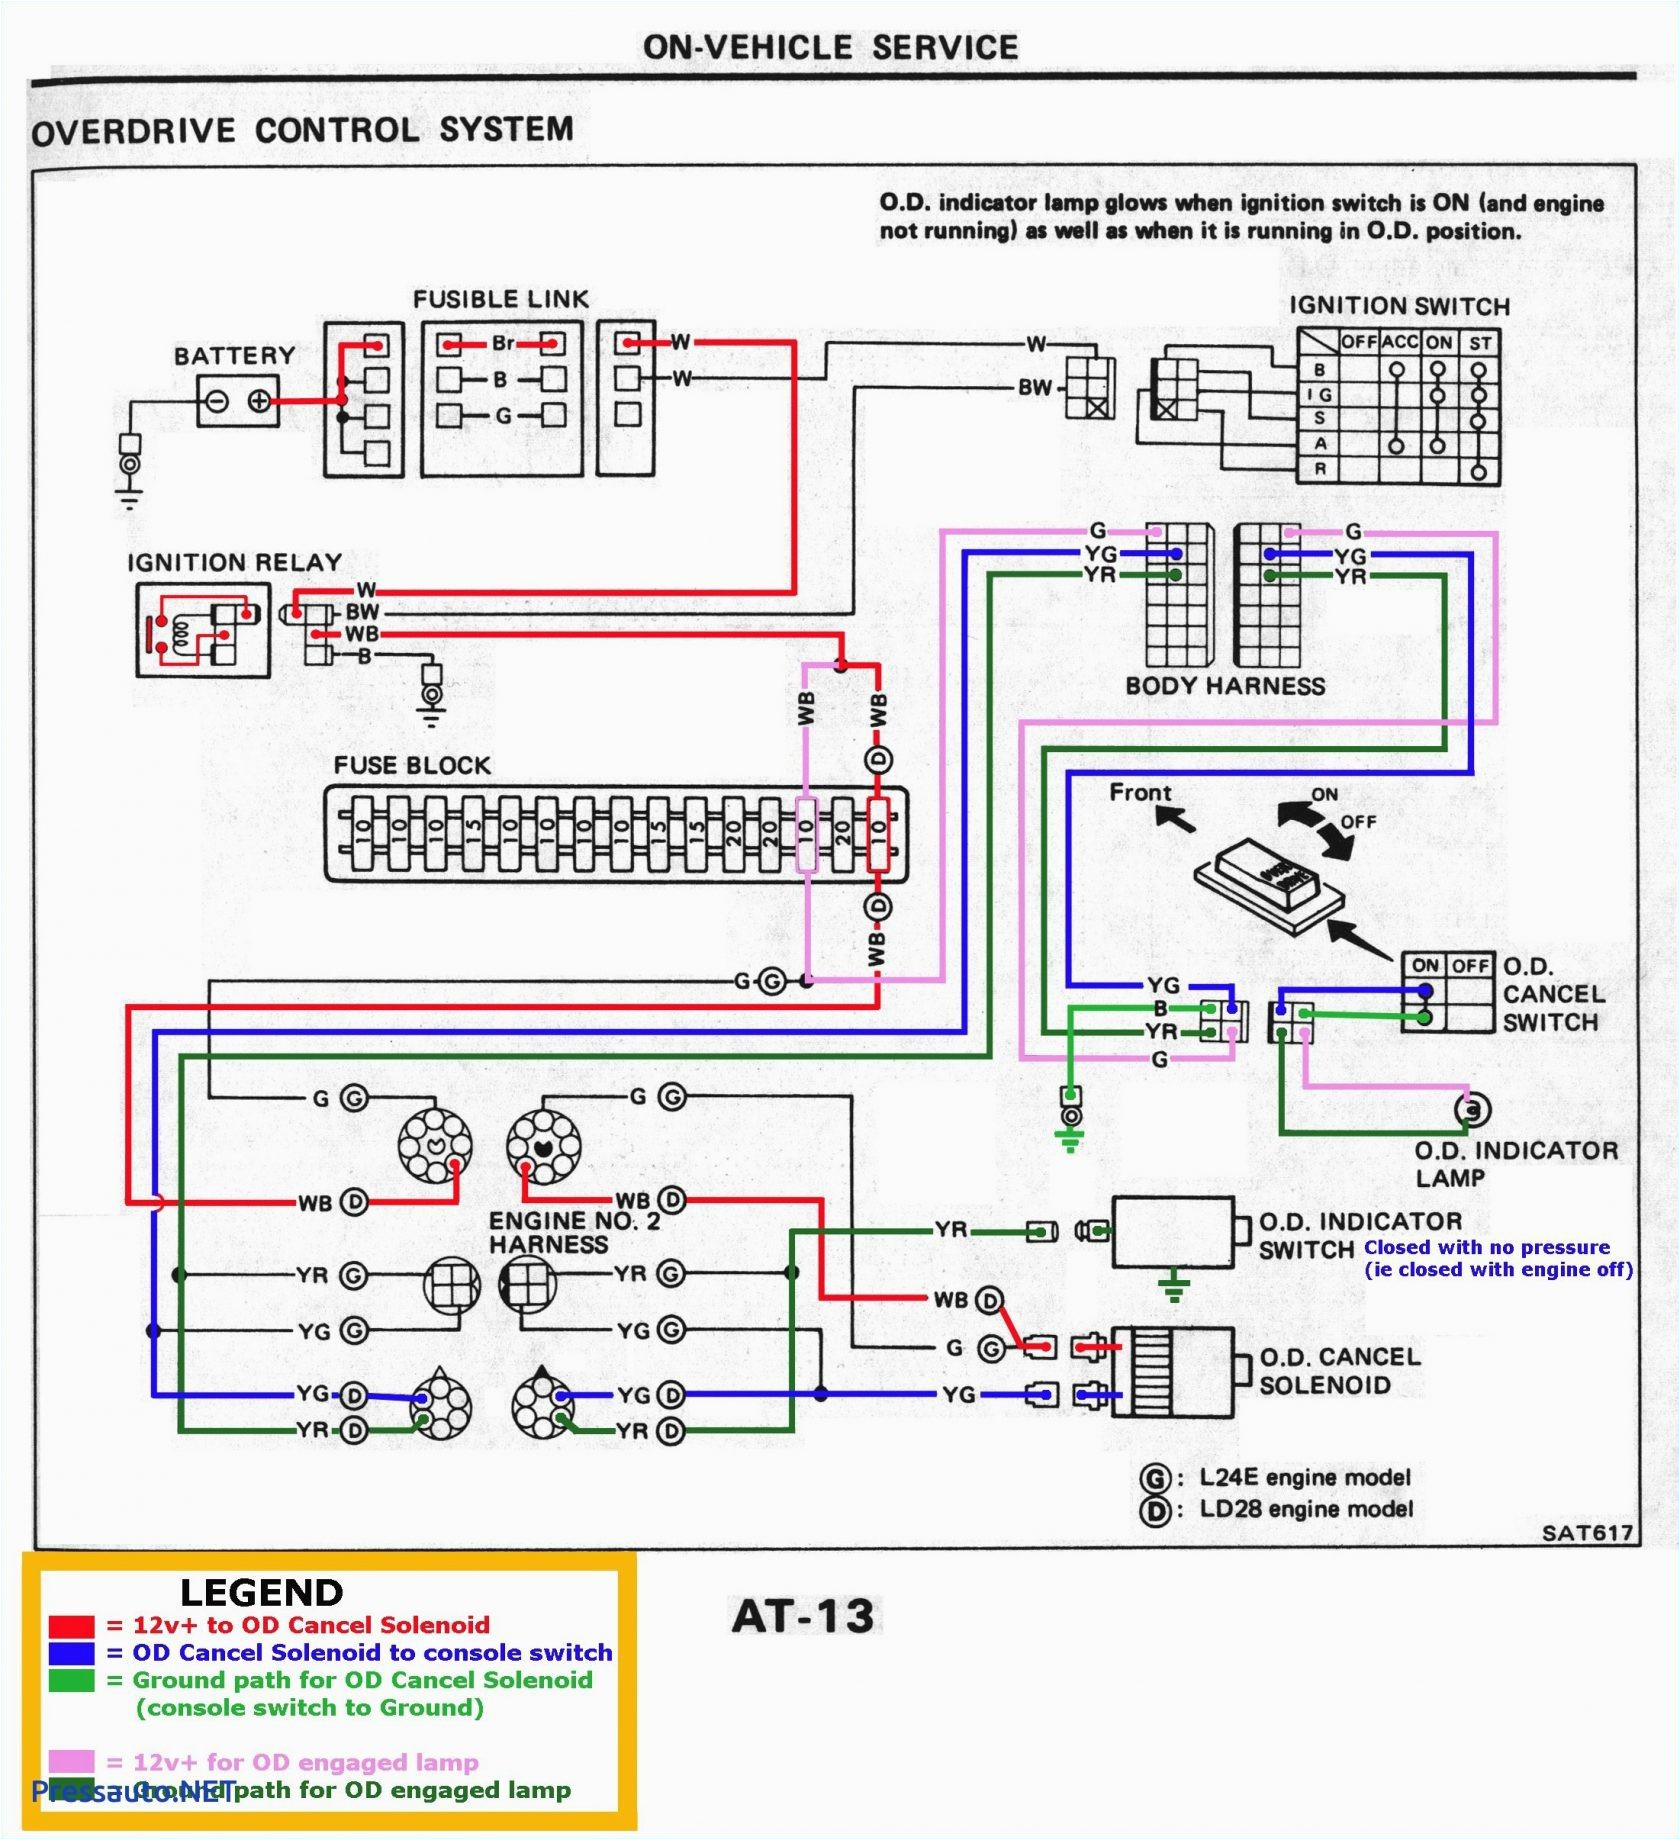 heater blower motor switch wiring mod nastyz28com extended wiring 1995 firebird wiring diagram on dual dimmer